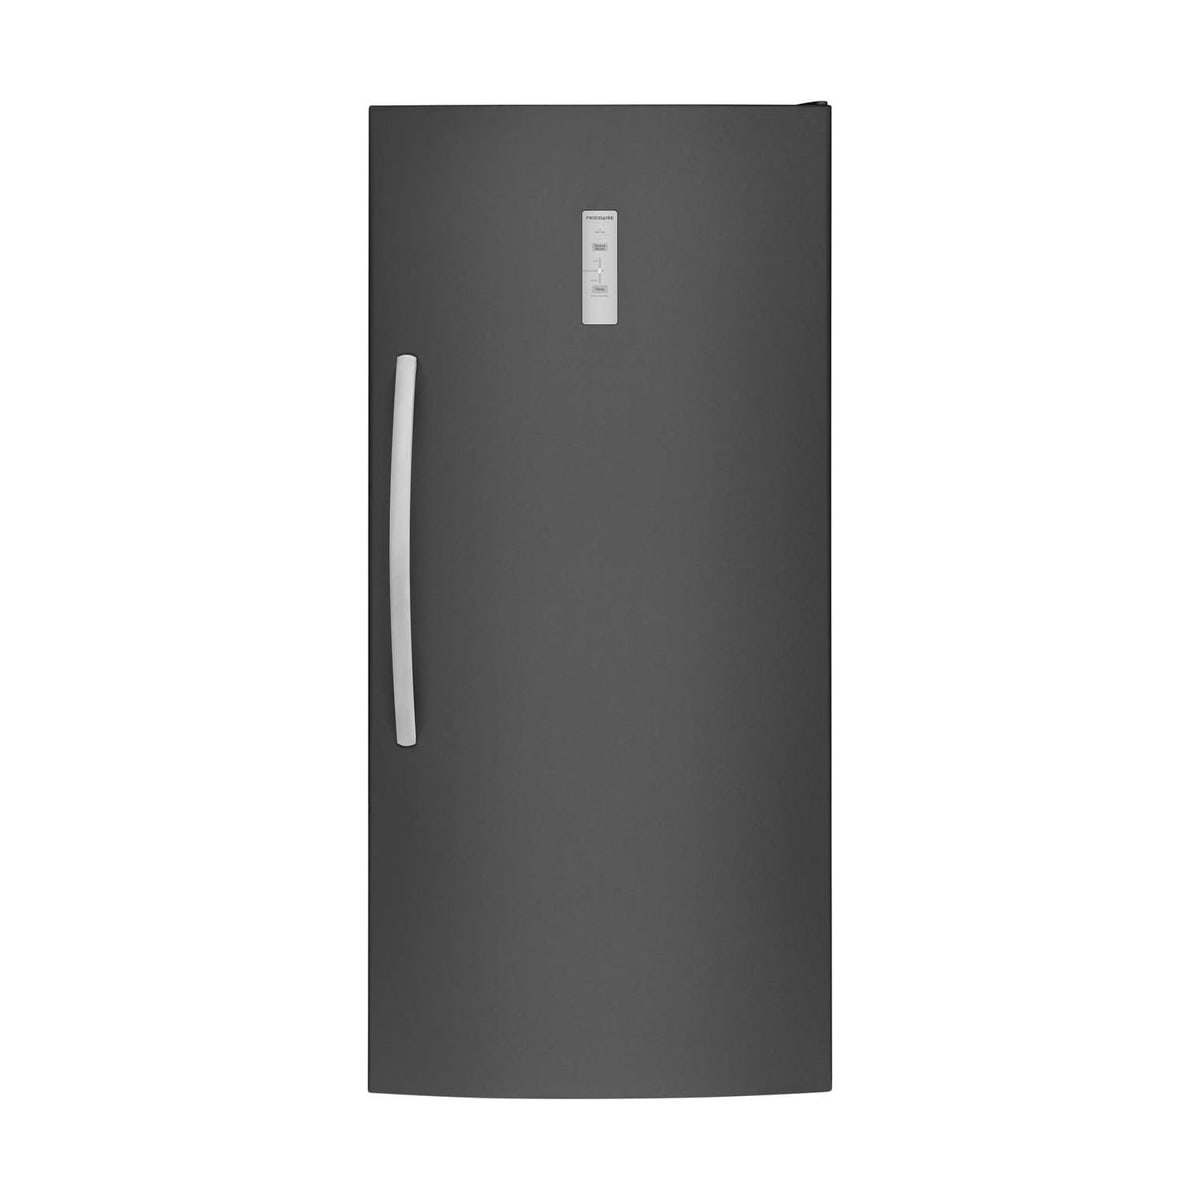 Frigidaire 20 cu.ft. Upright Freezer with LED Lighting FFUE2024AW